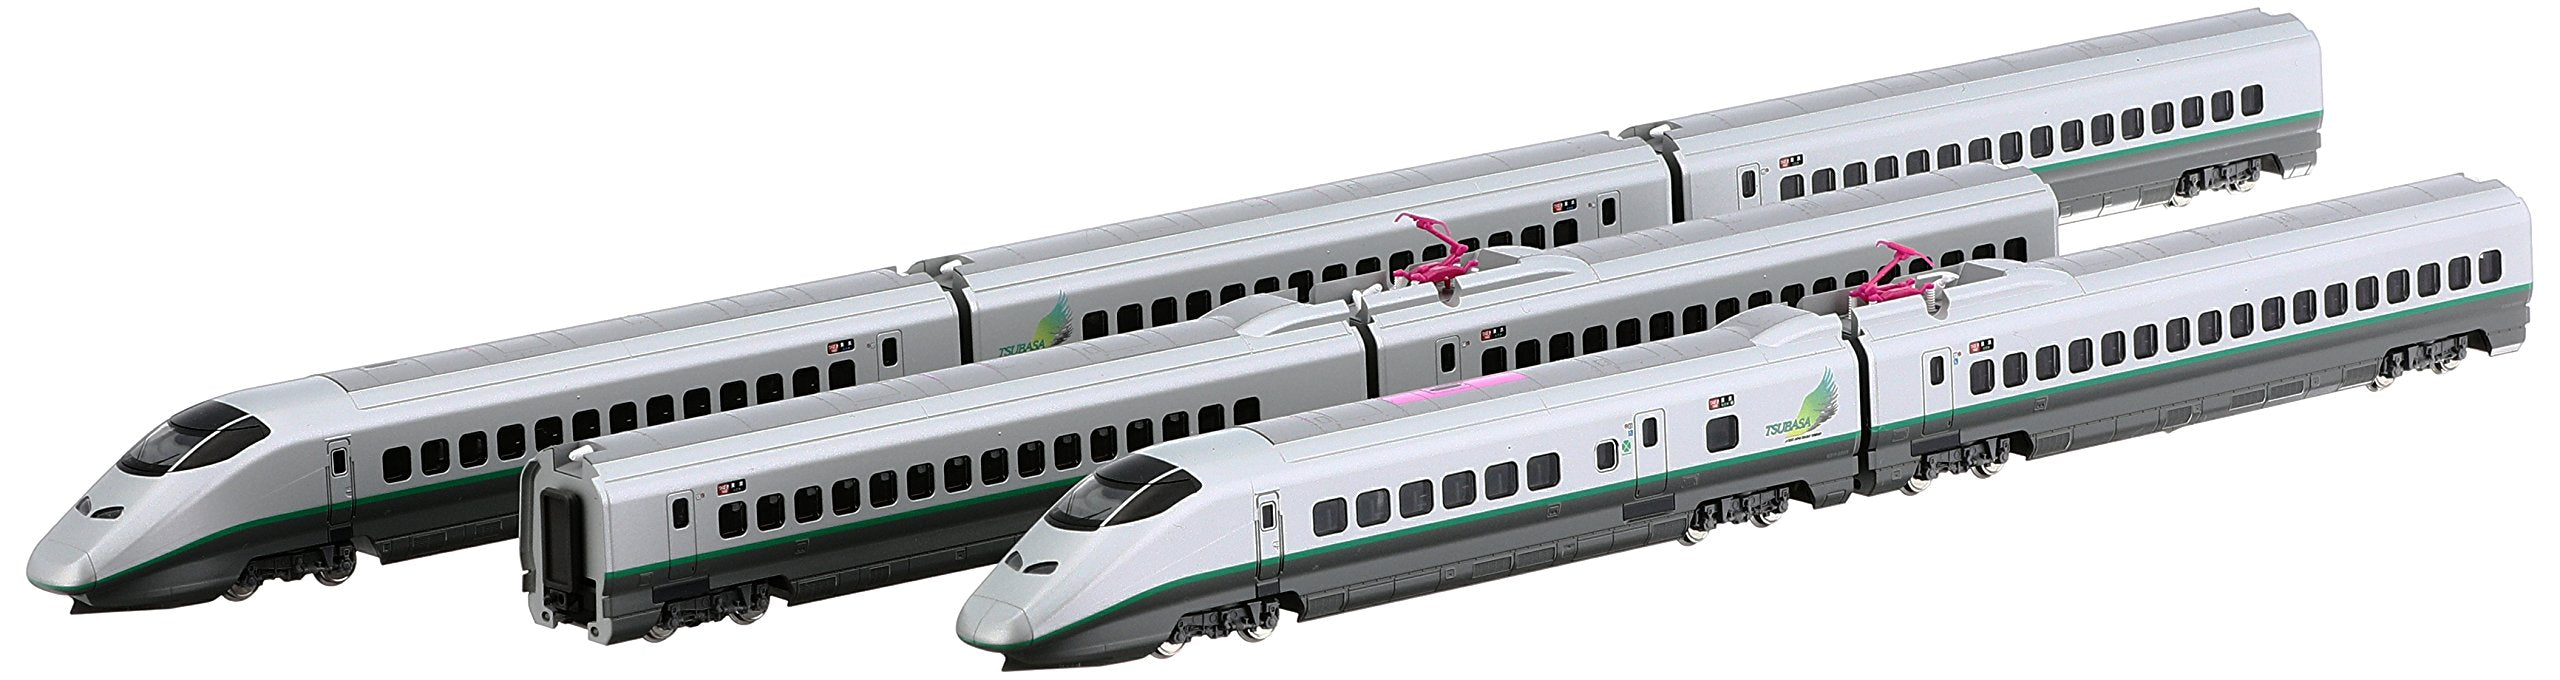 KATO 10-1289 Series E3-2000 Yamagata Shinkansen 'Tsubasa' 7 Cars Set N Scale